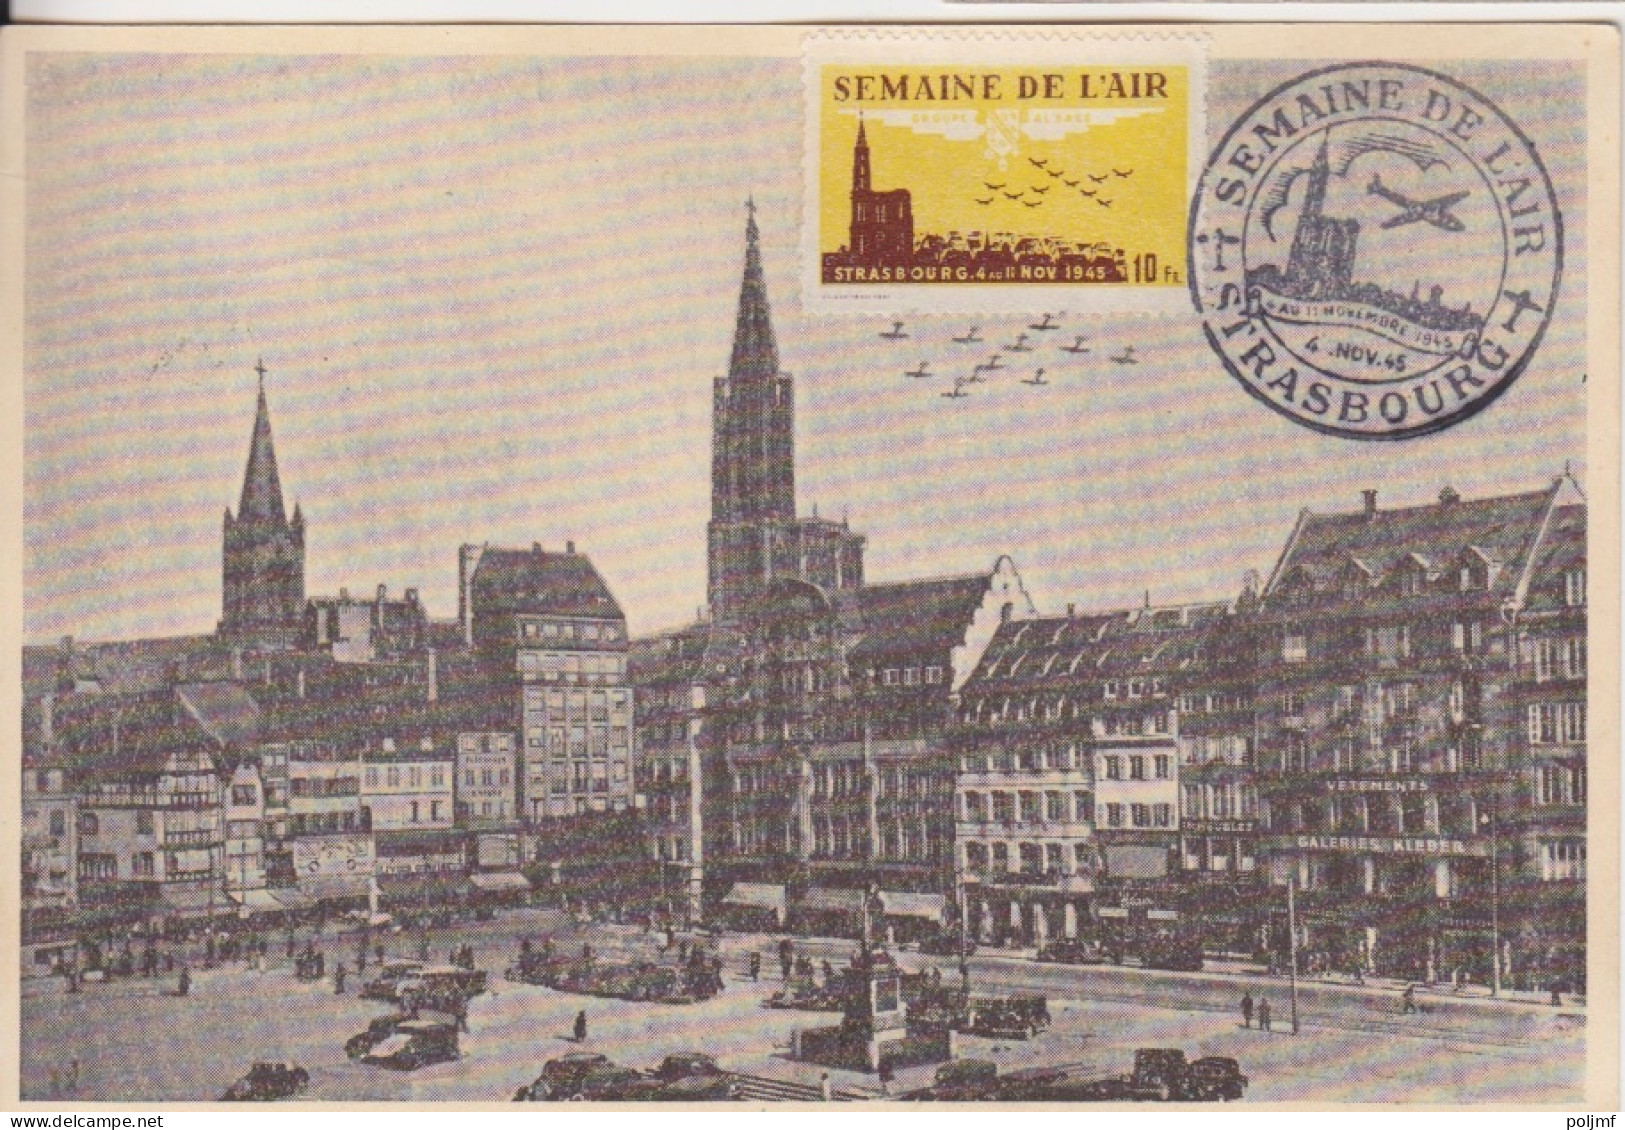 CP (Semaine De L'Air) Obl. GF Strasbourg Le 4 Nov 45 Sur 1f50 Dulac Rose N° 691 + Vignette Semaine De L'Air - 1944-45 Marianne Van Dulac